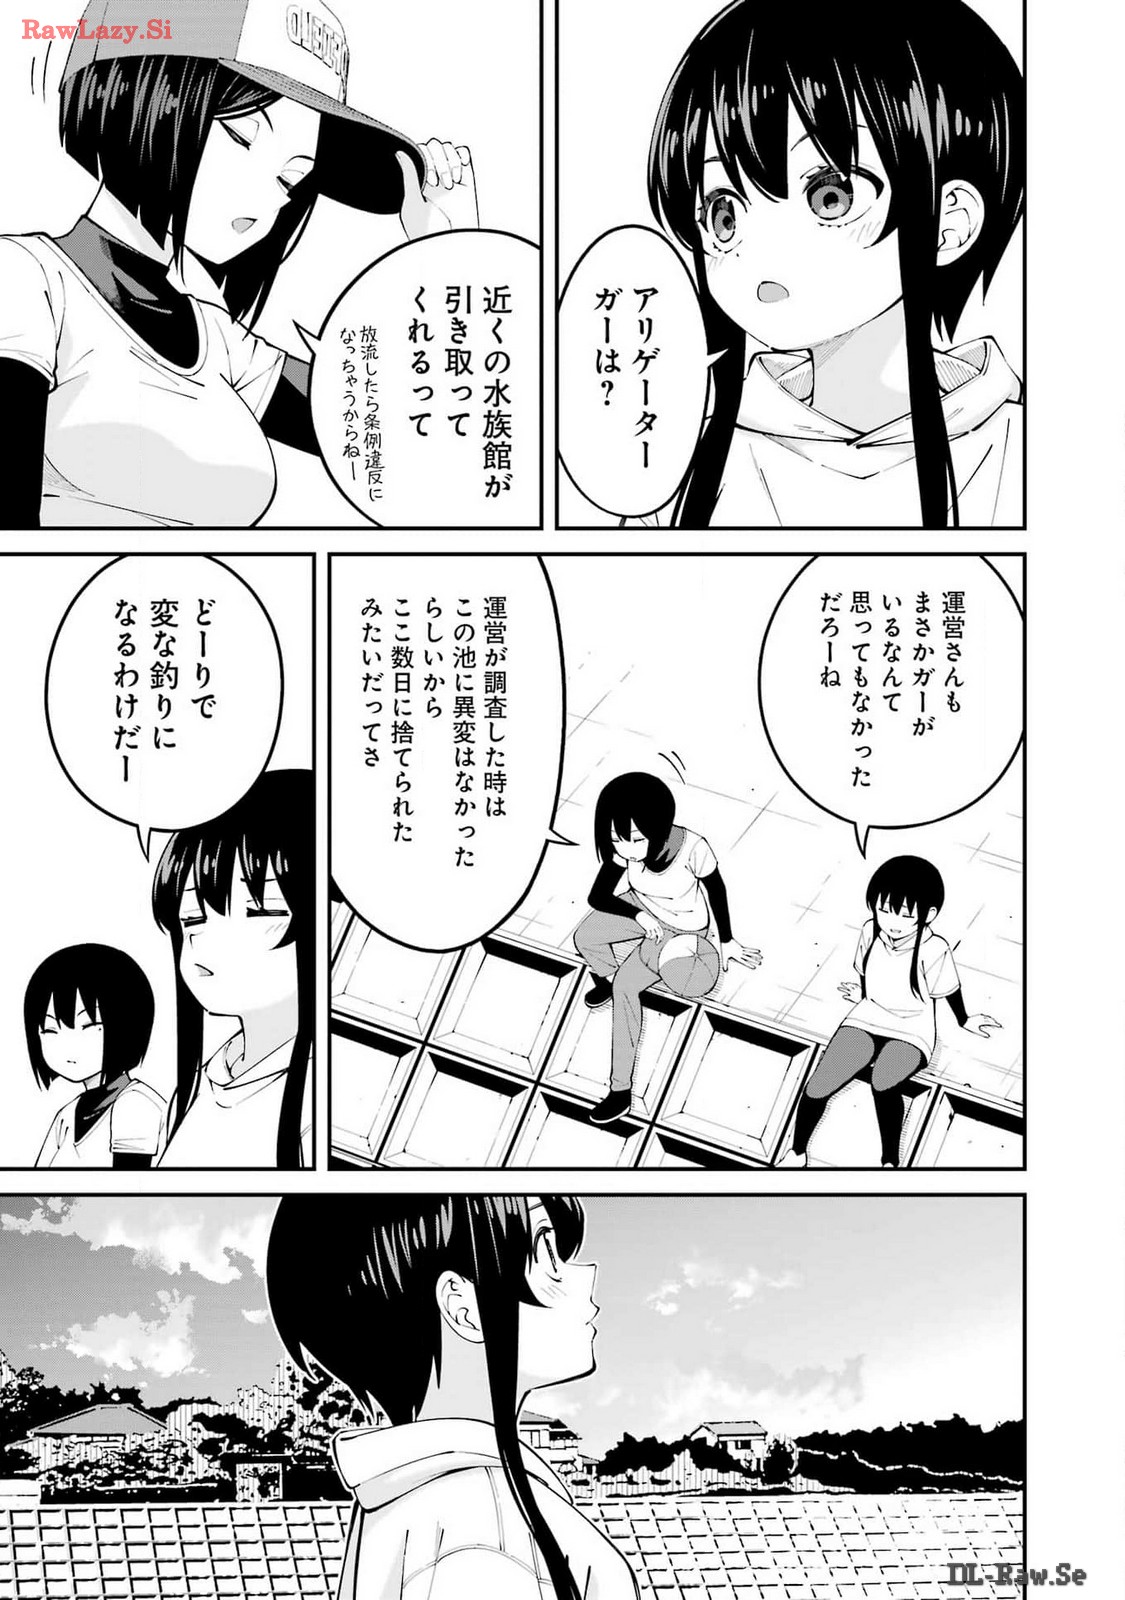 Tsuri Komachi - Chapter 58 - Page 3